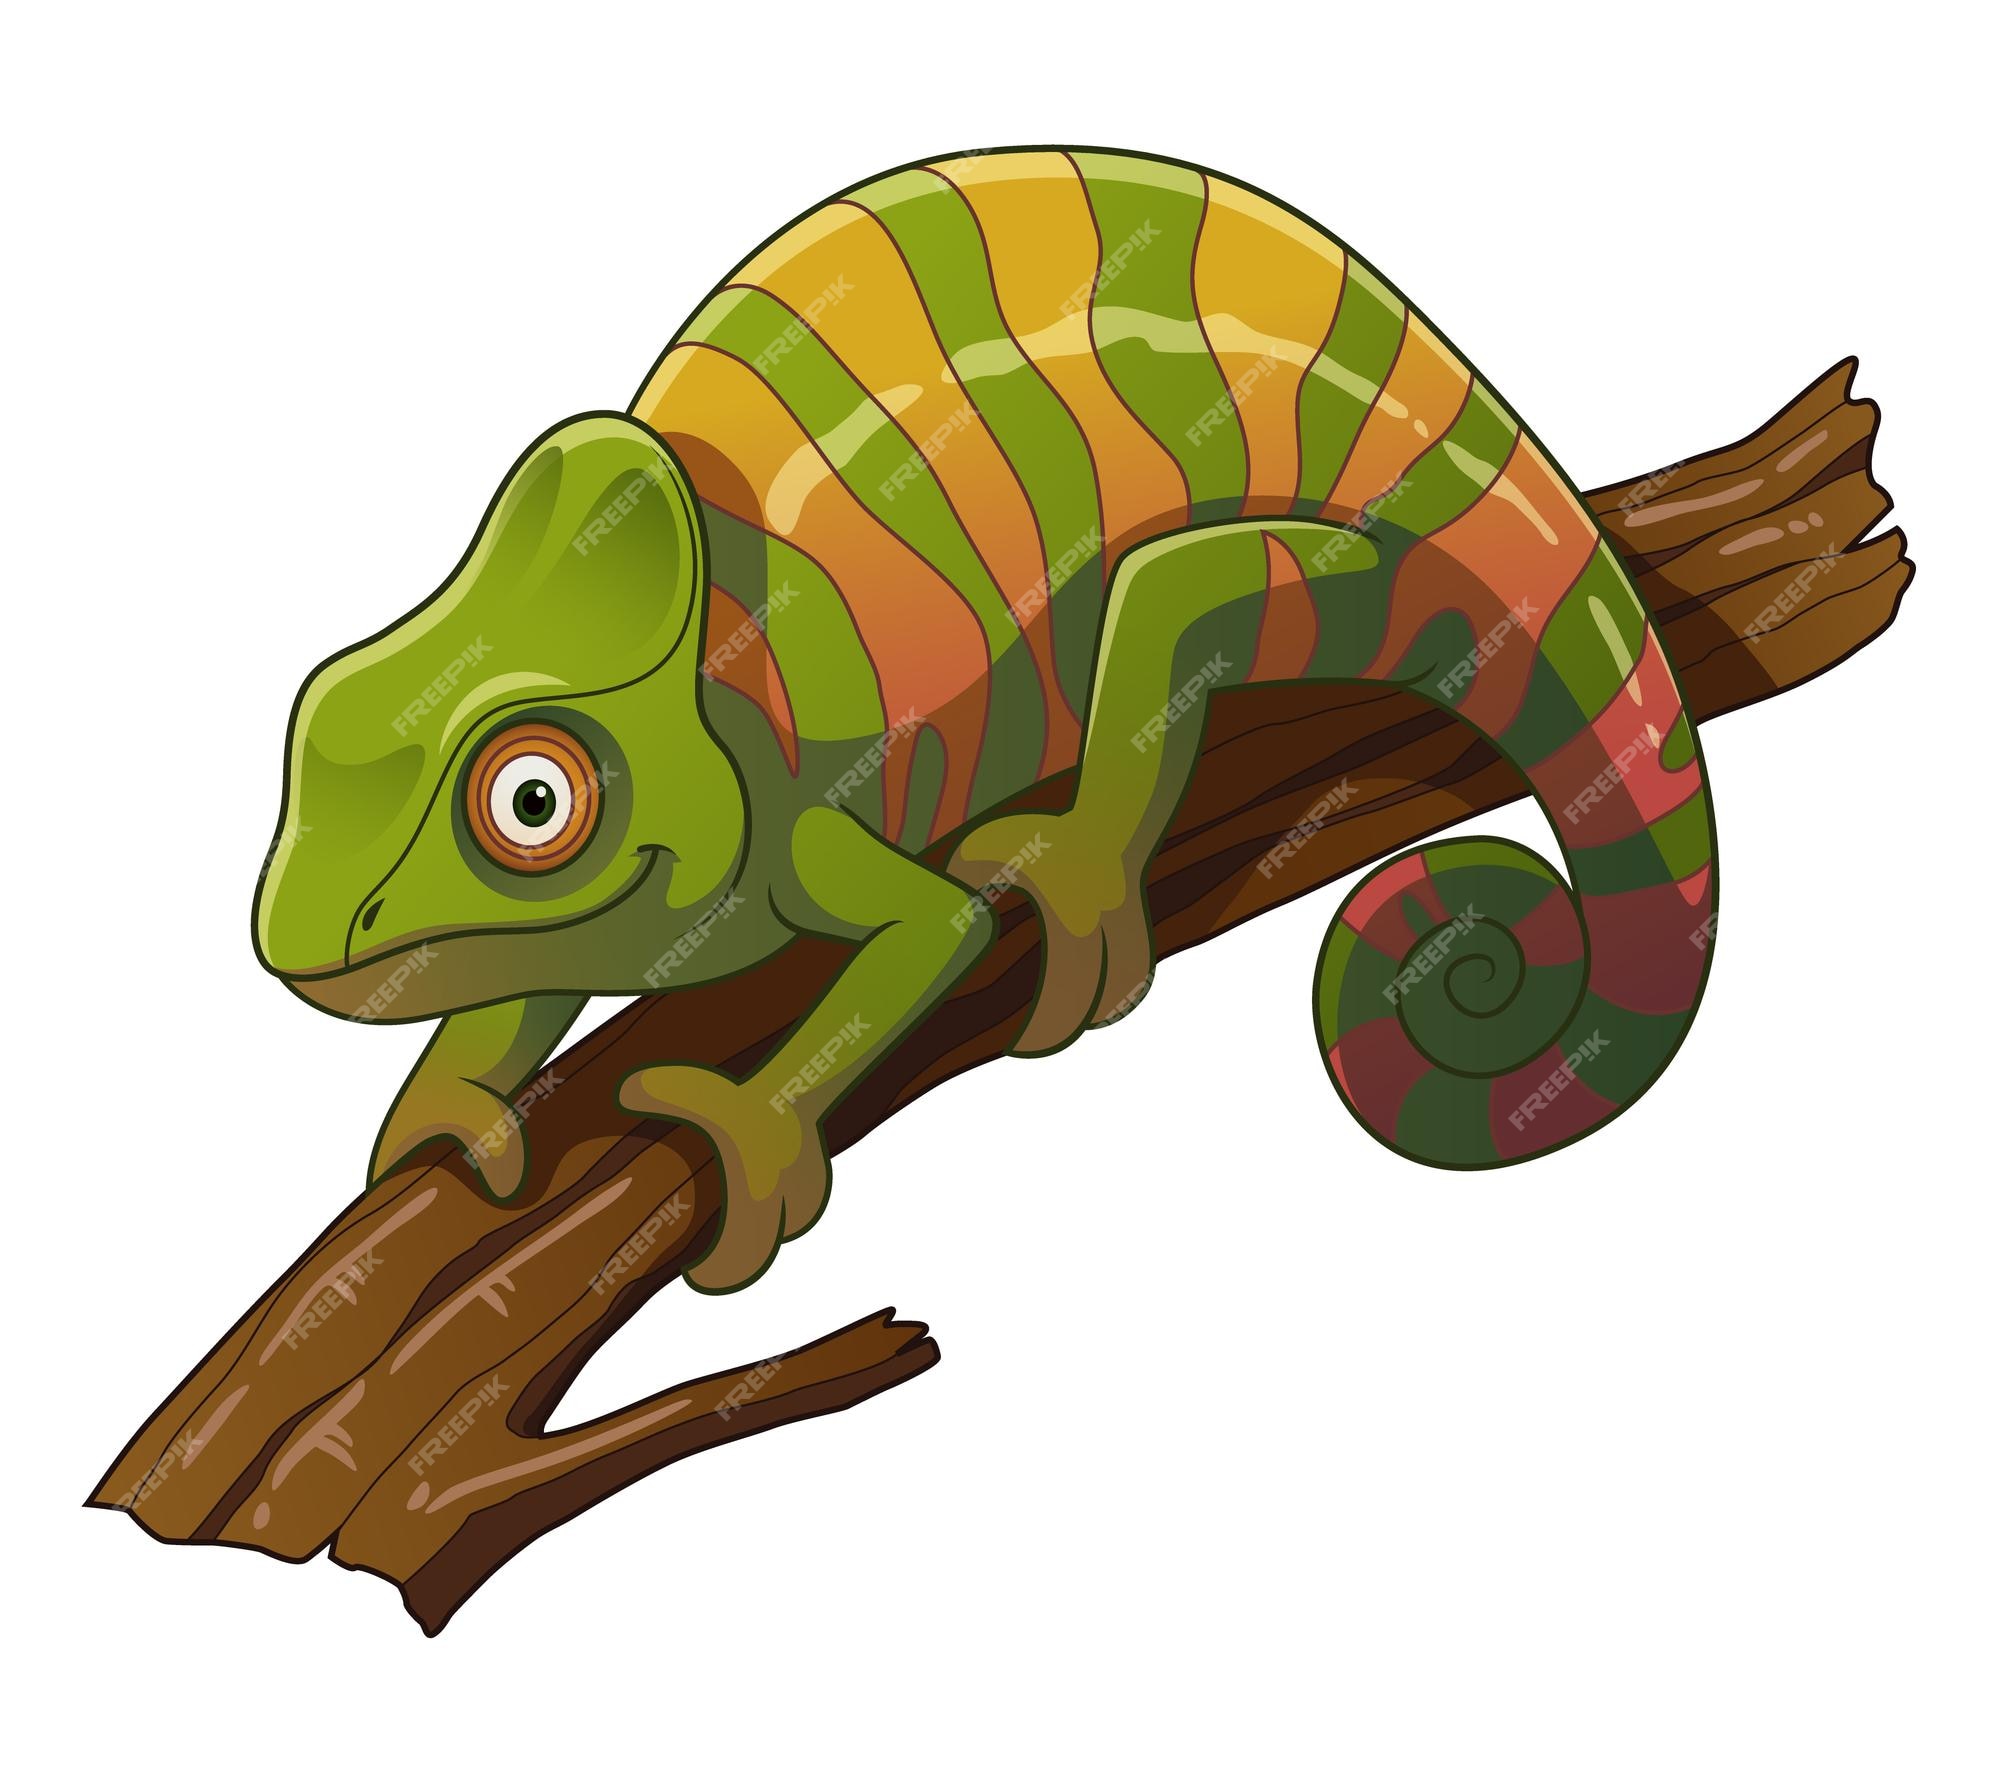 Chameleon Cartoon Images - Free Download on Freepik